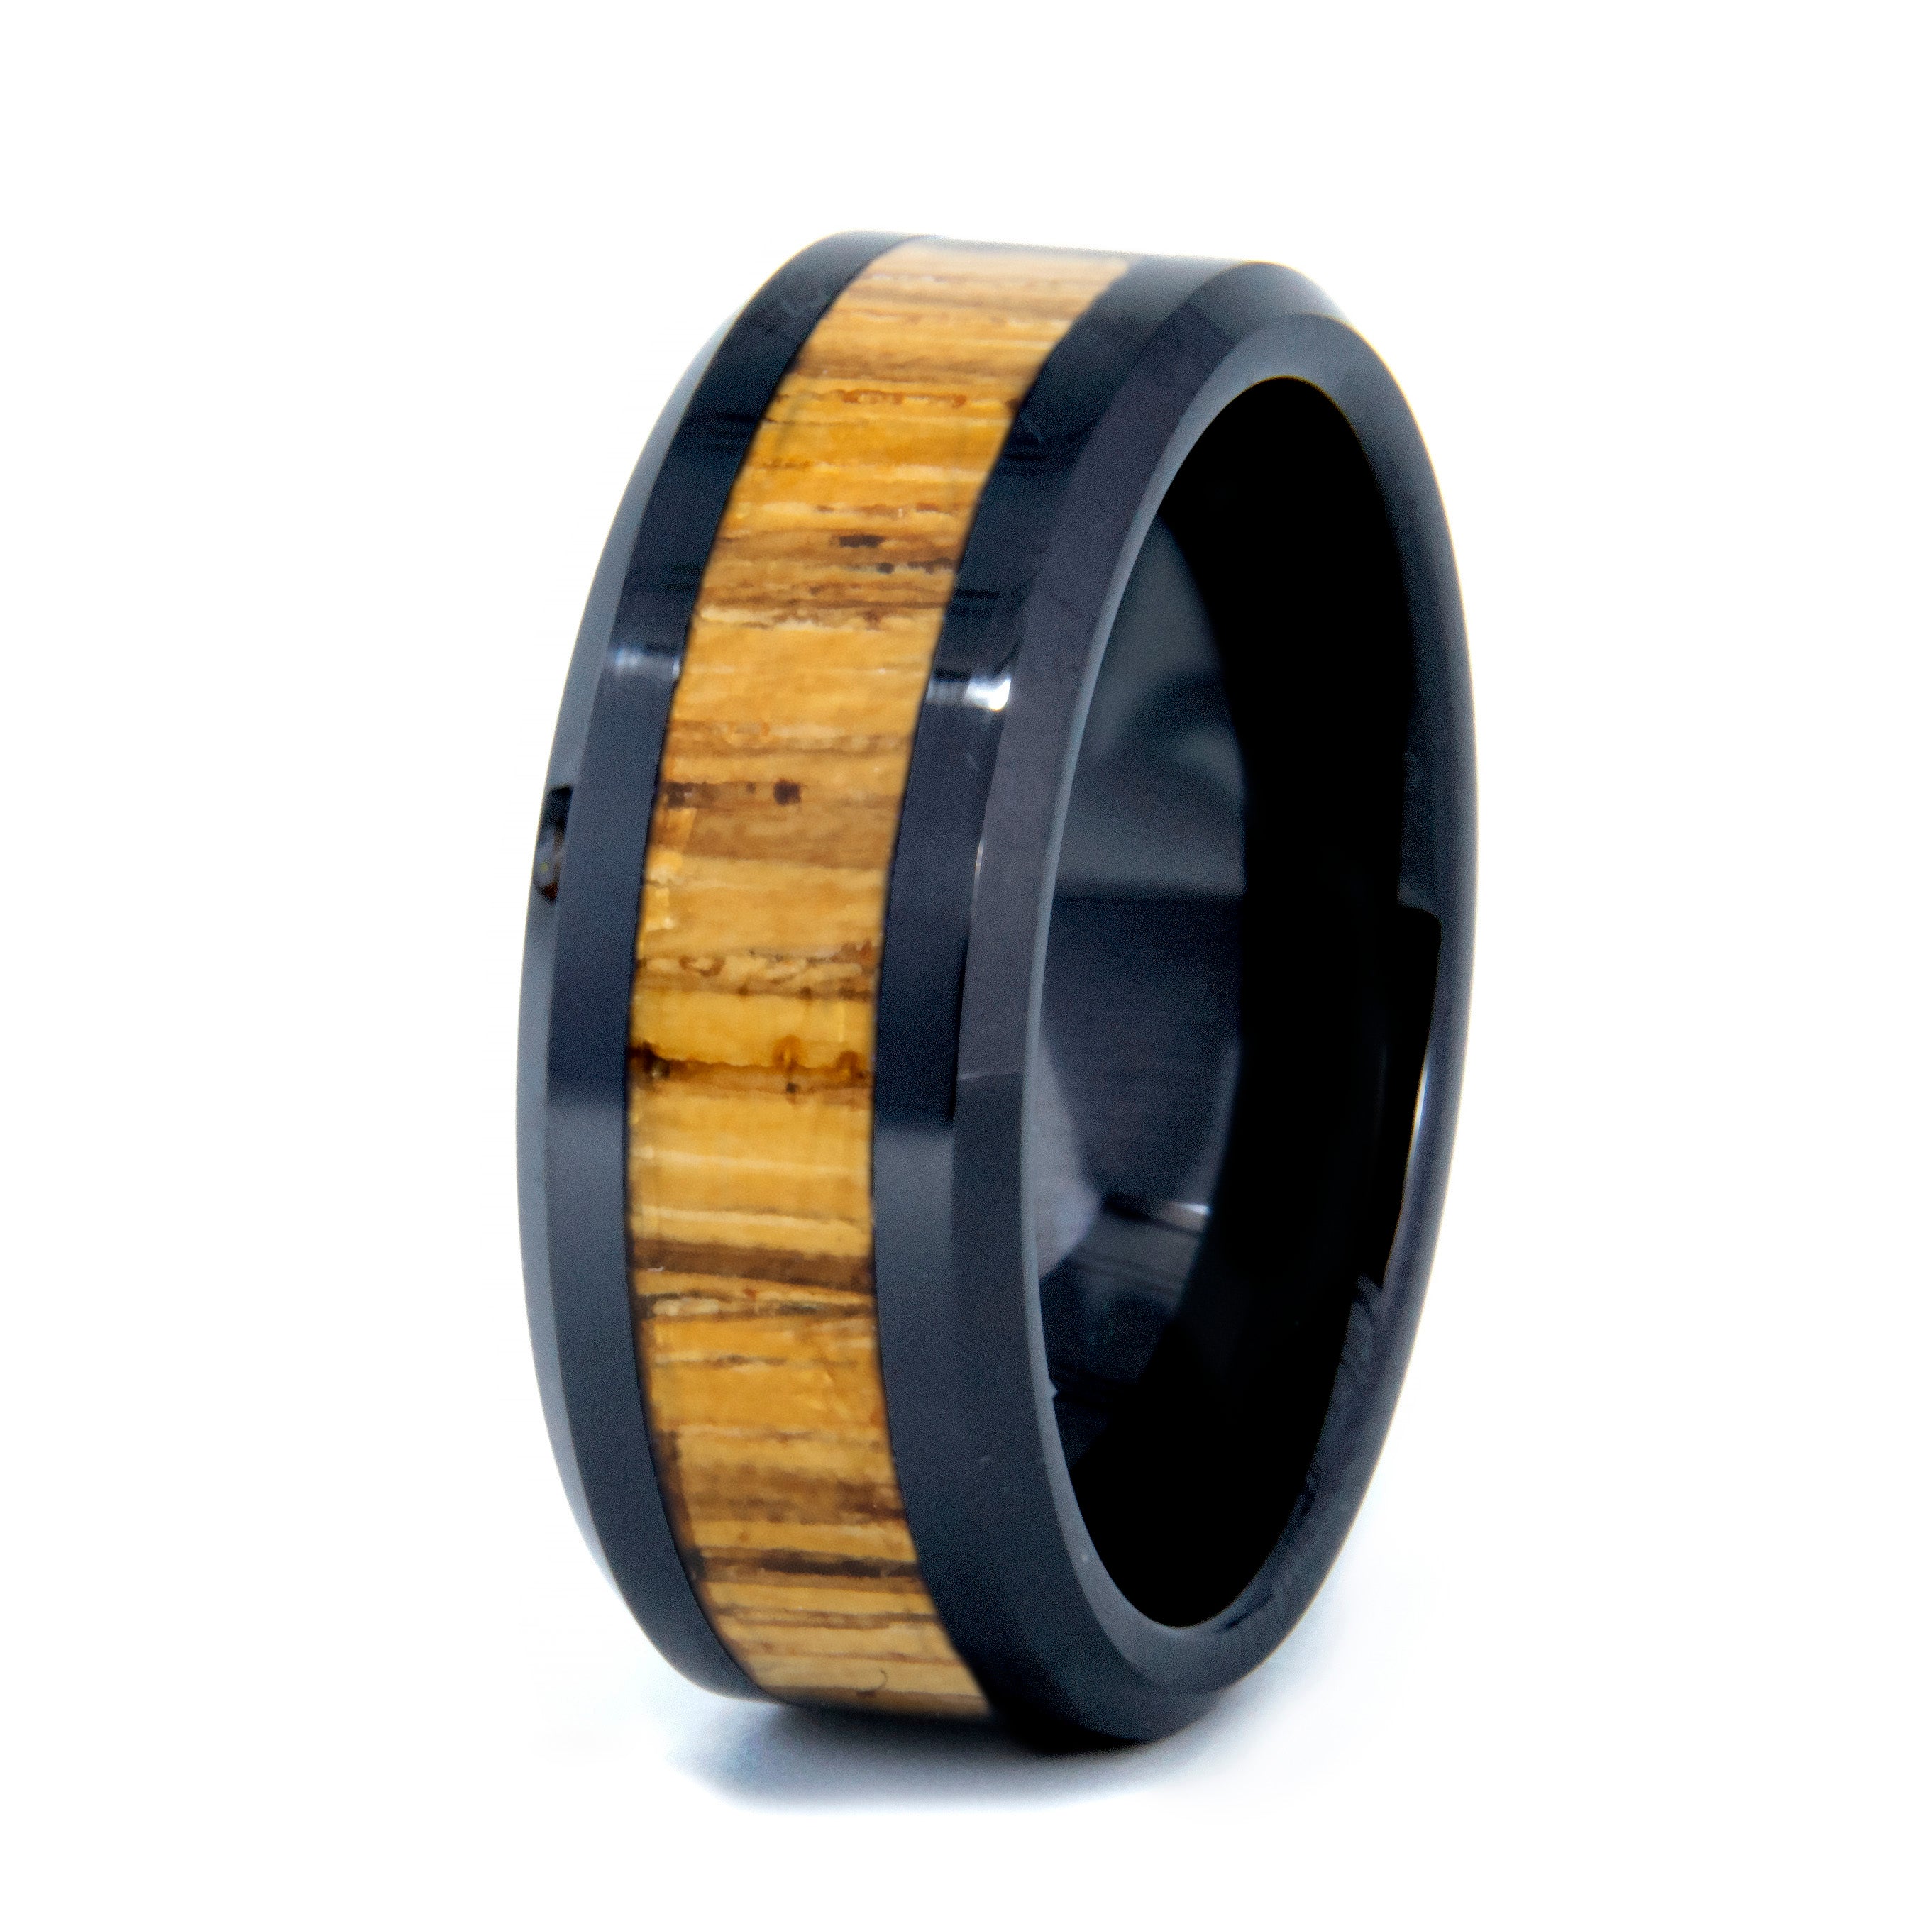 Zebrawood Ring With Black Ceramic Band Copperbeard Jewelry